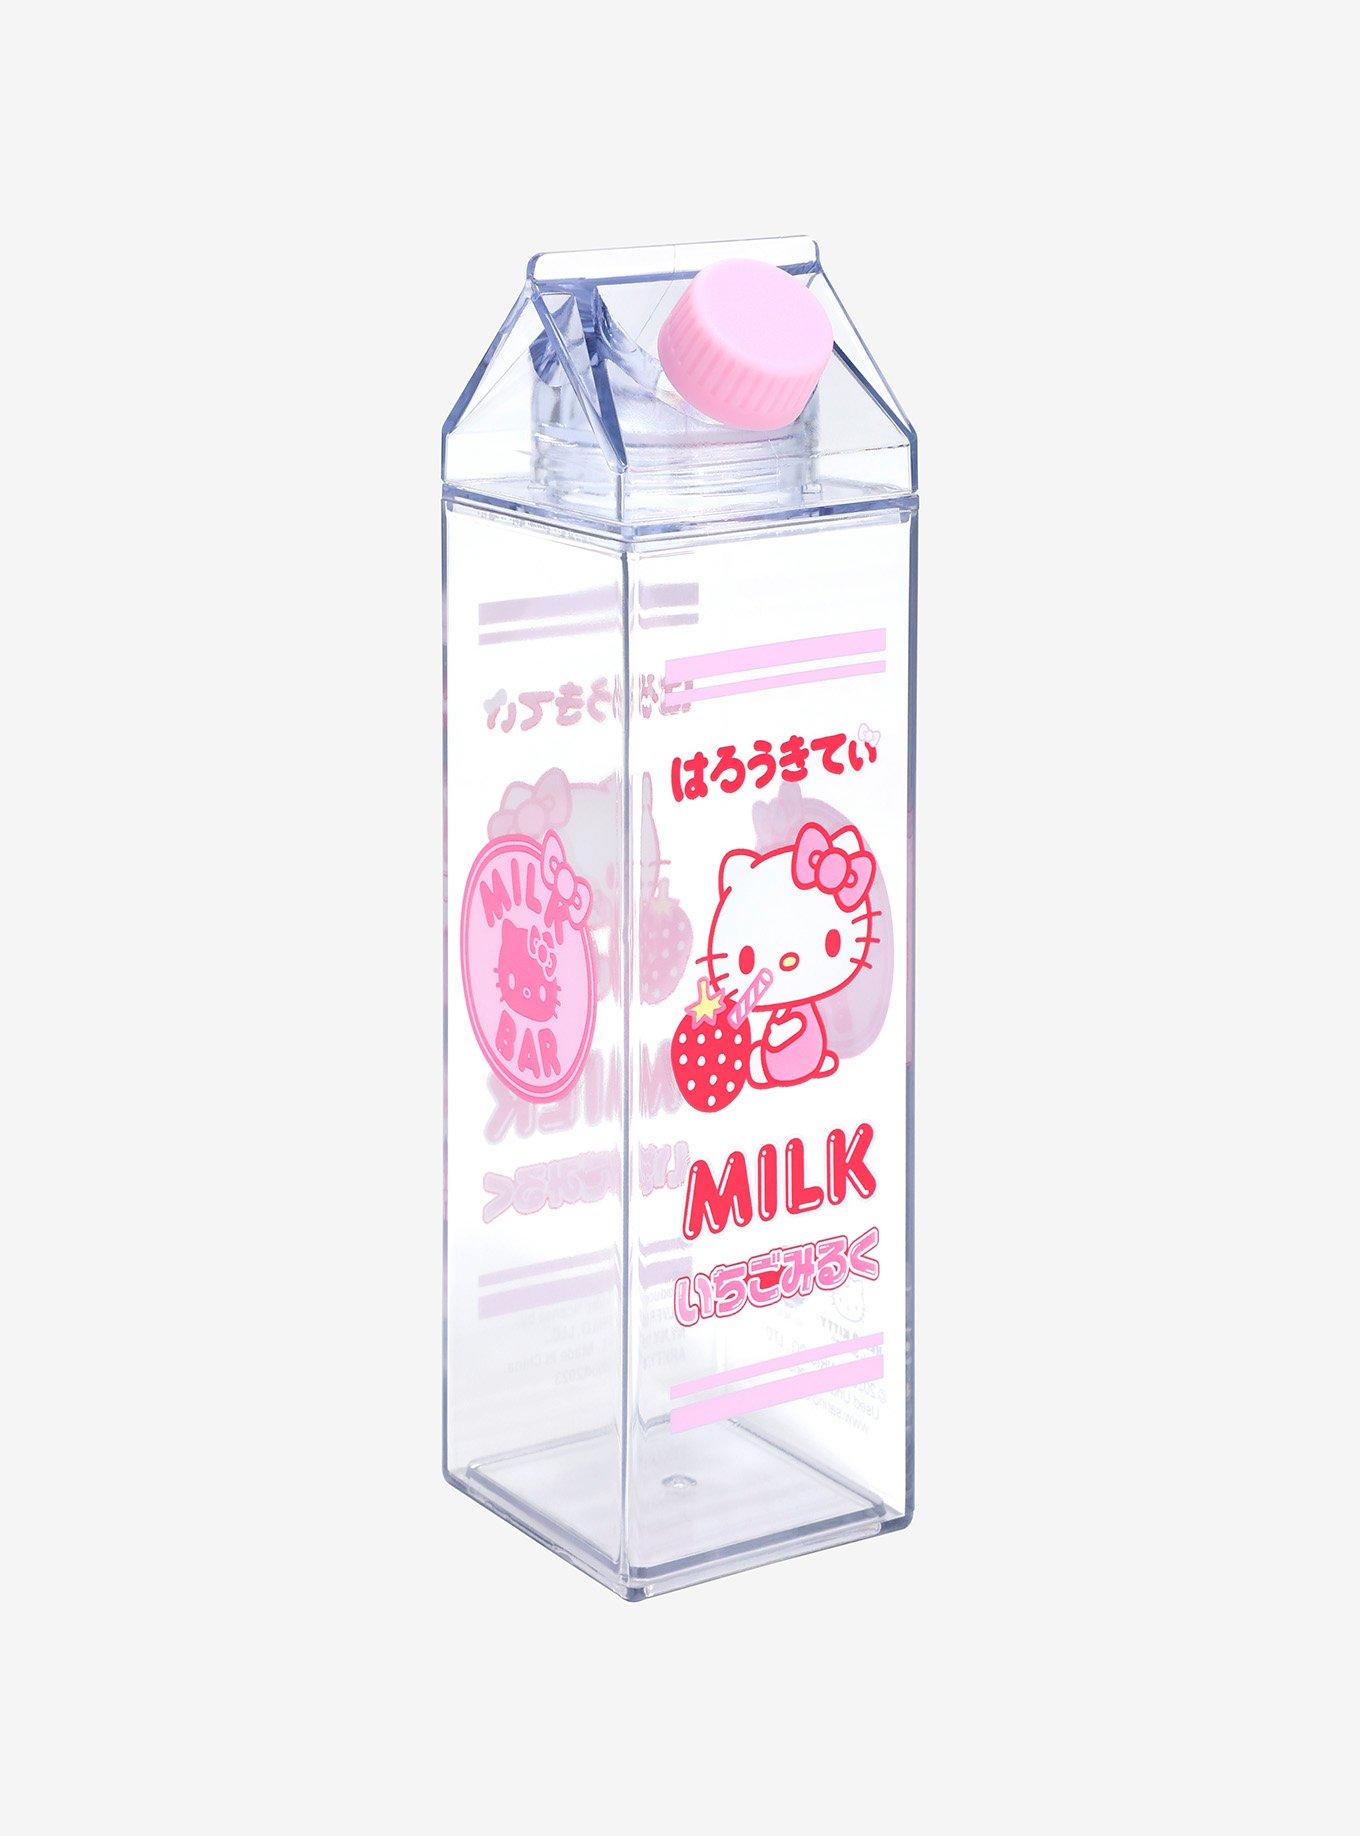 Loungefly Hello Kitty Strawberry Milk Crossbody Bag